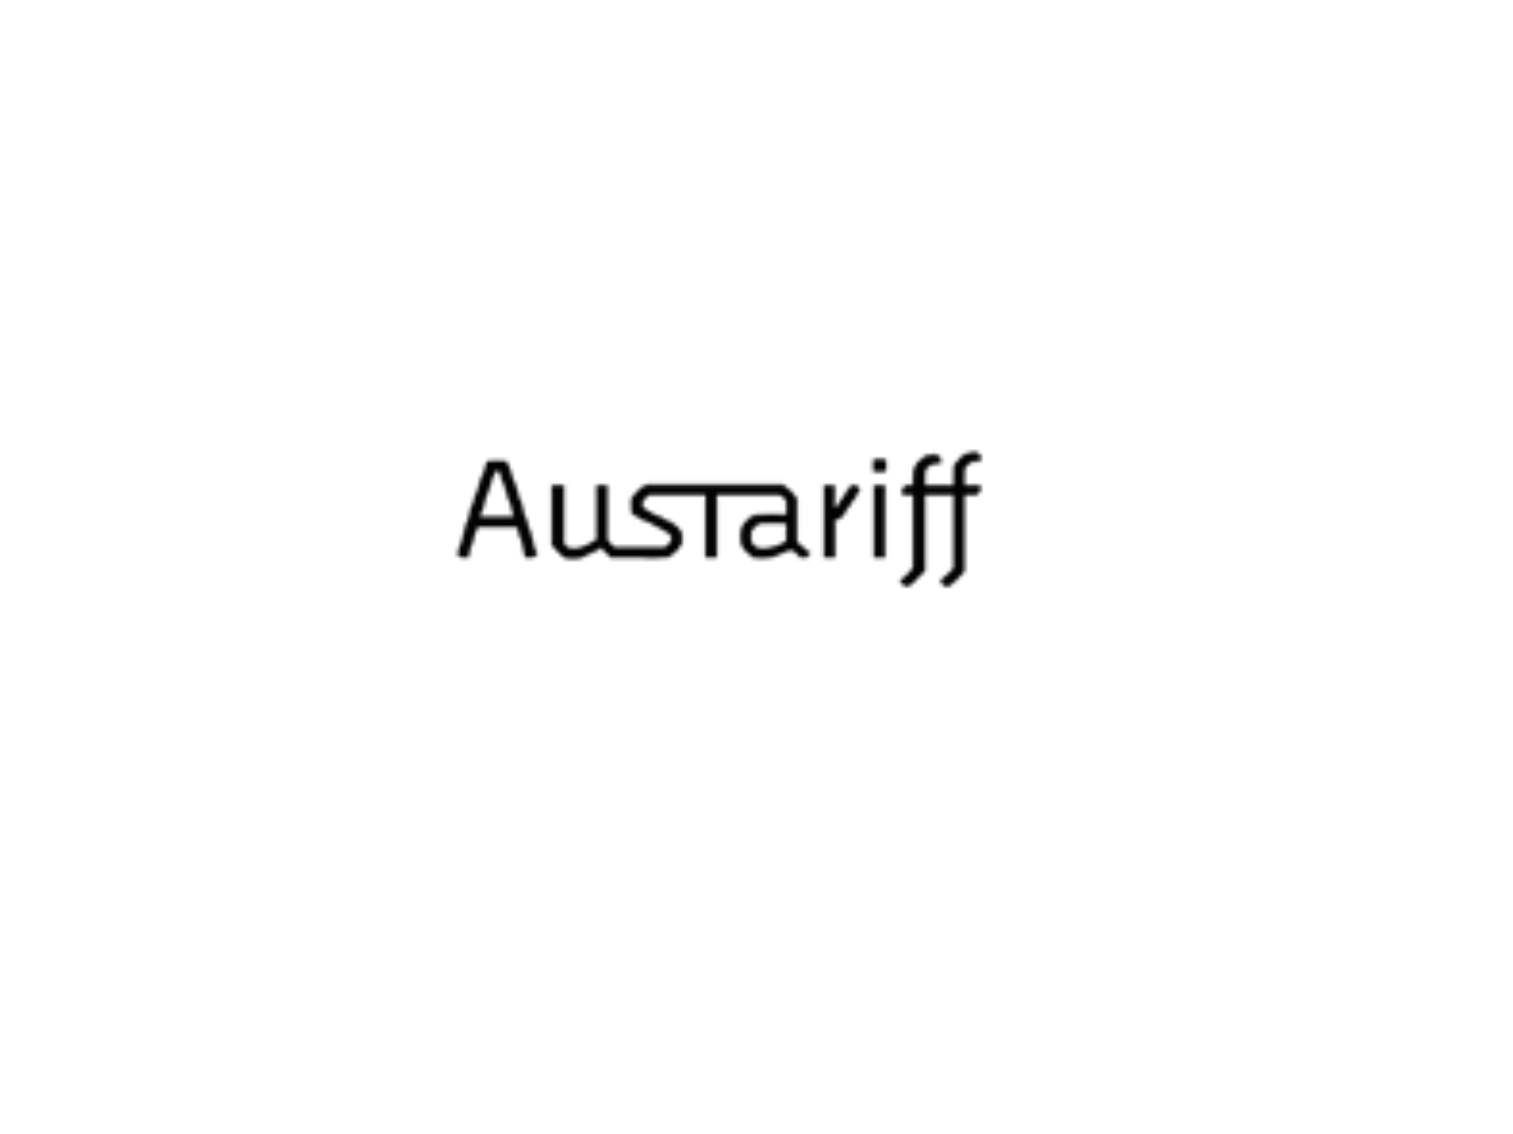 austariff logo.png